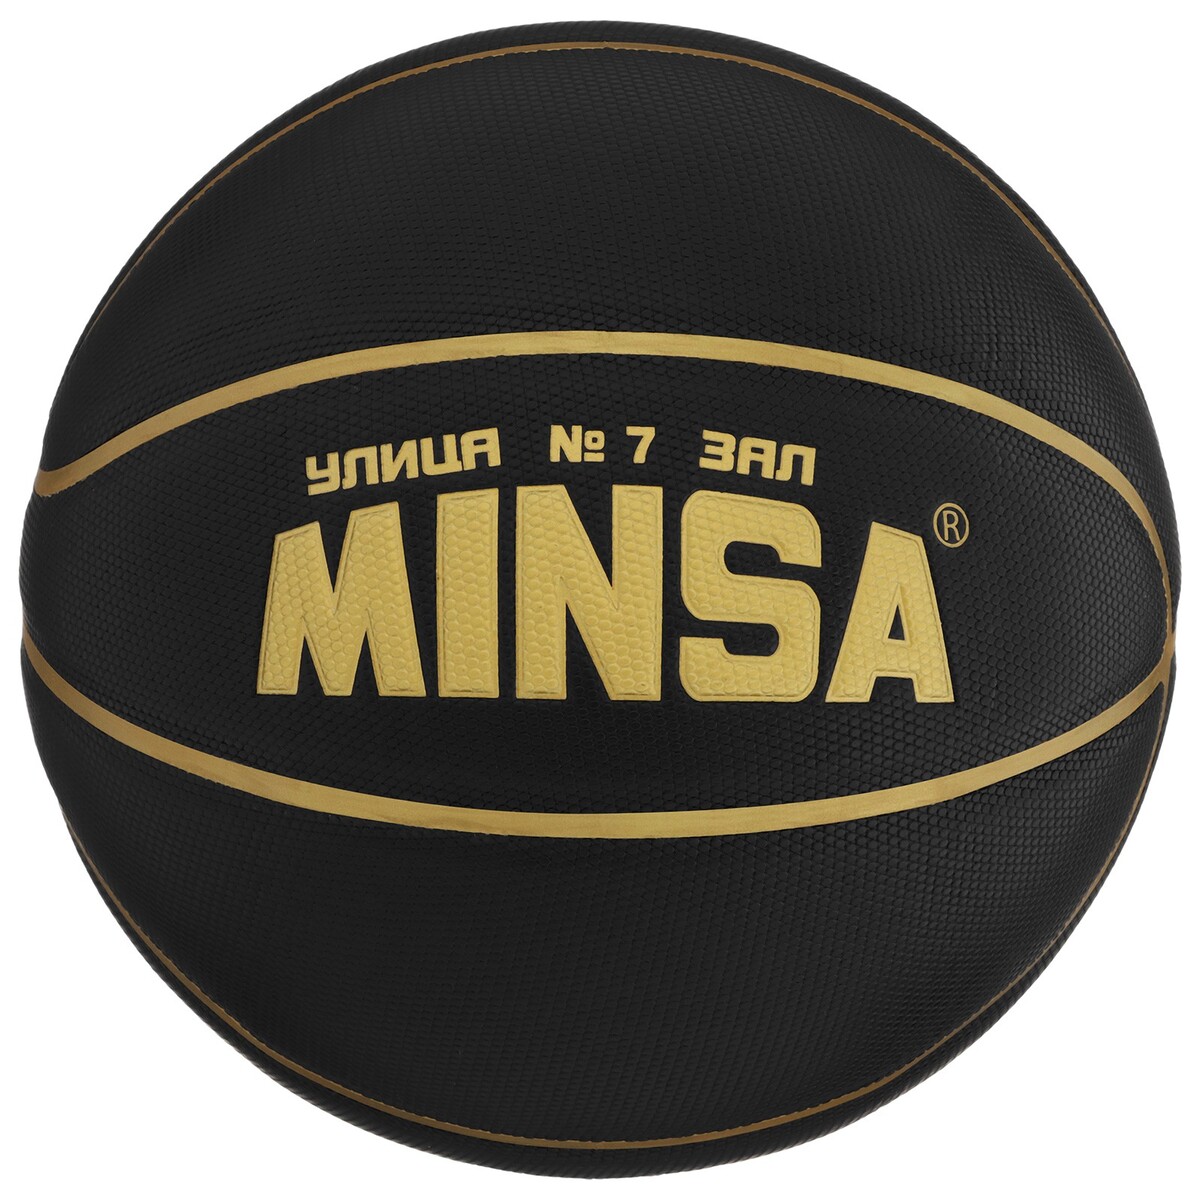 Баскетбольный мяч minsa, pu, размер 7, 600 г